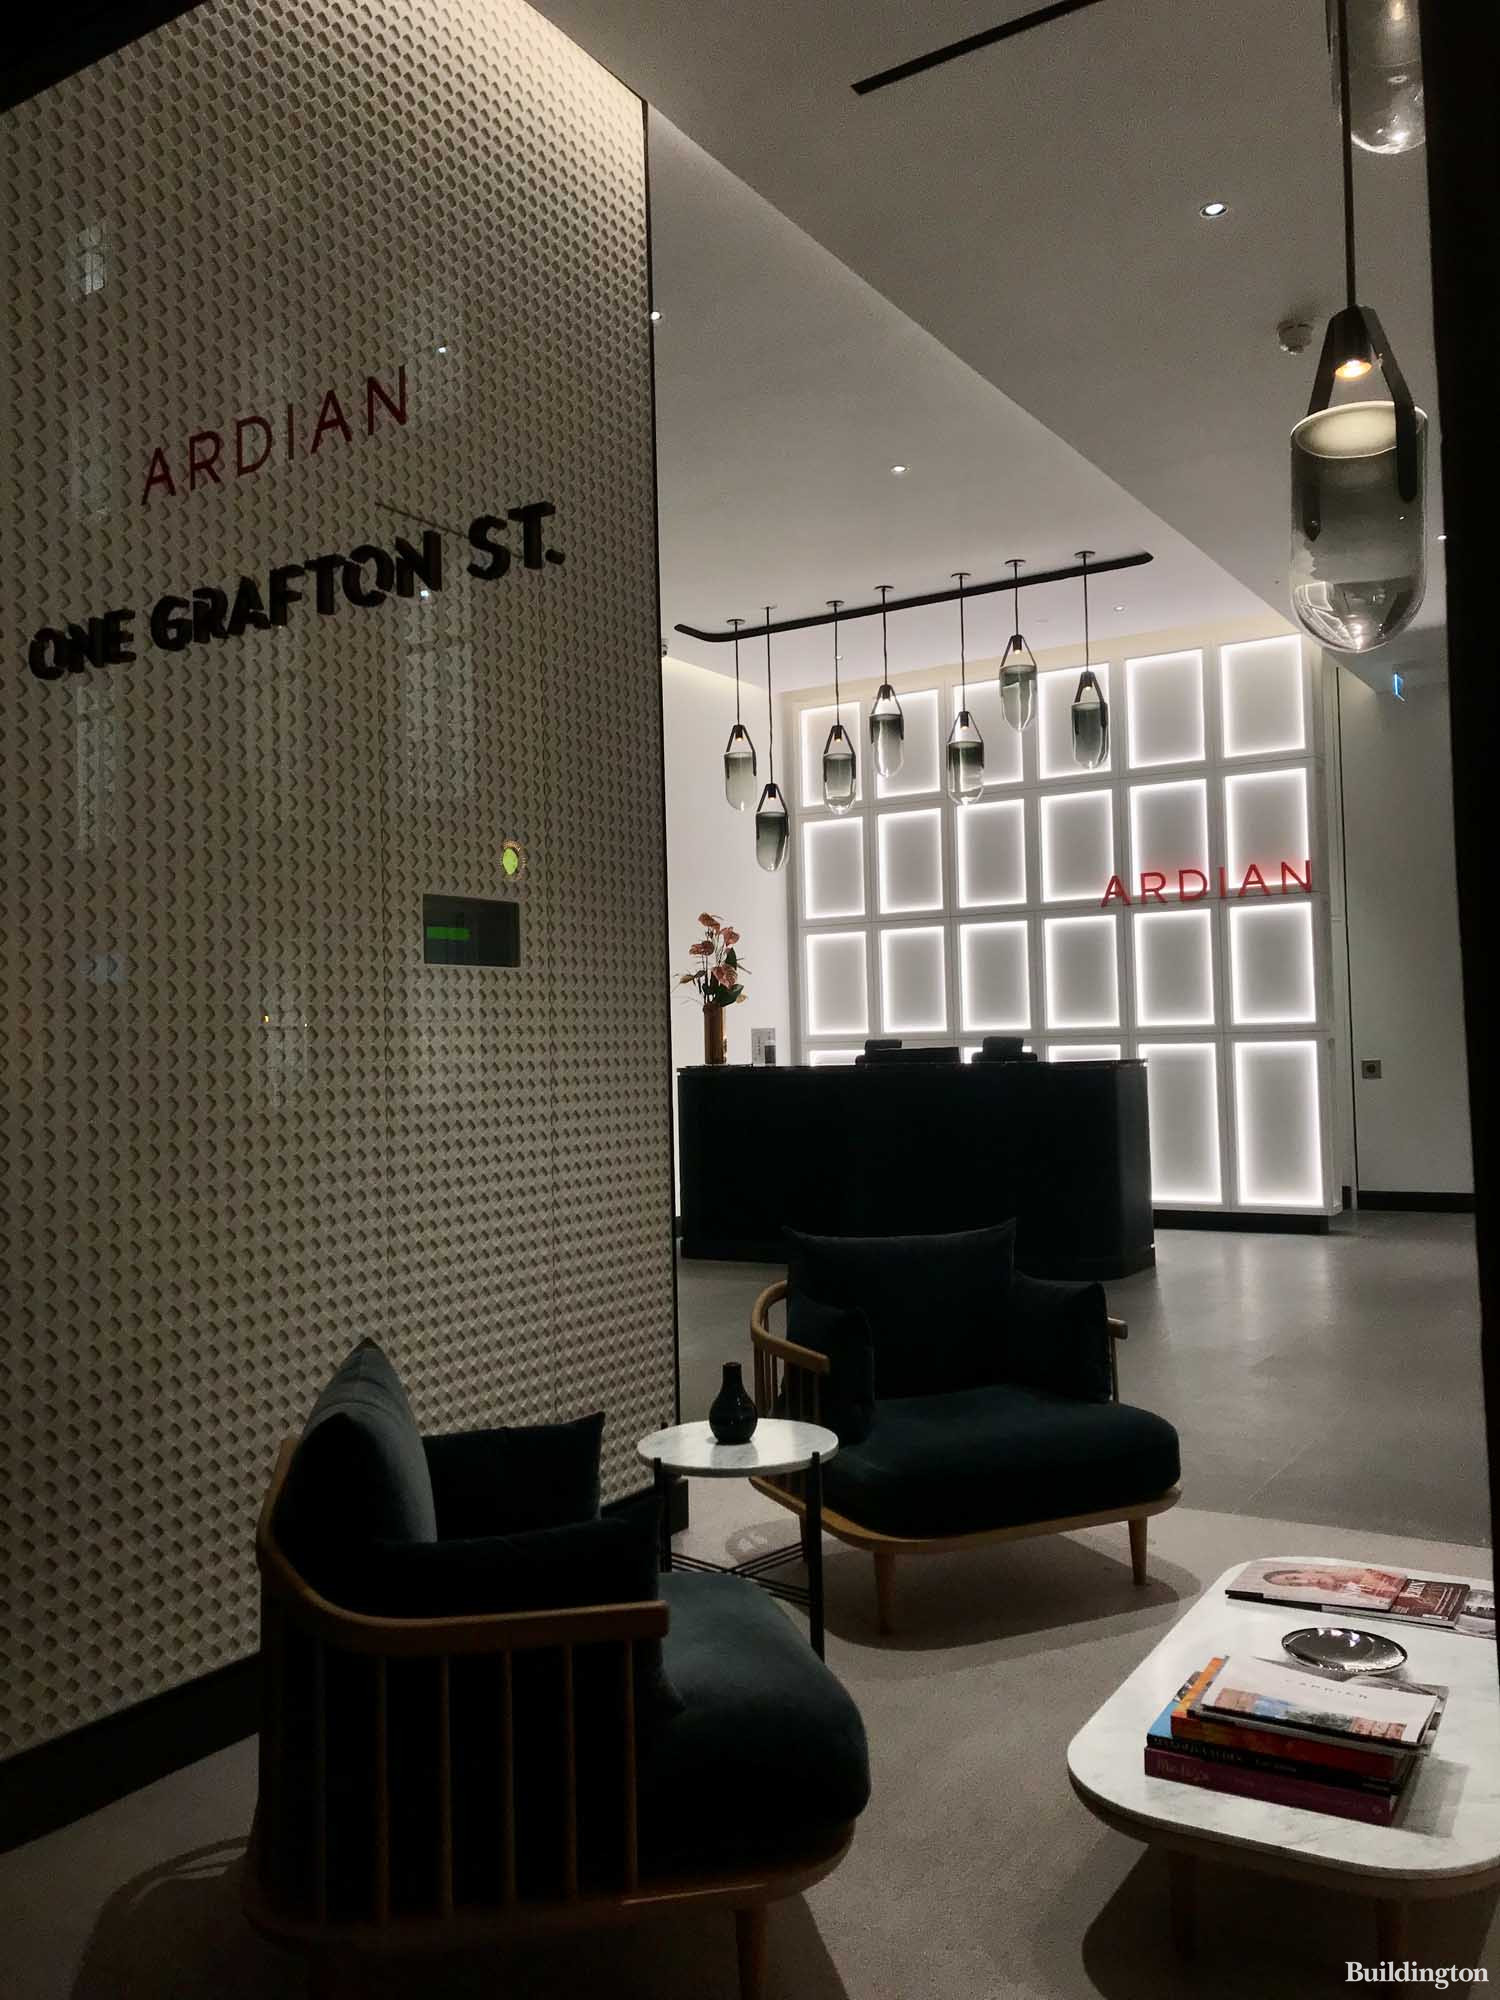 Ardian at One Grafton Street in Mayfair, London W1.